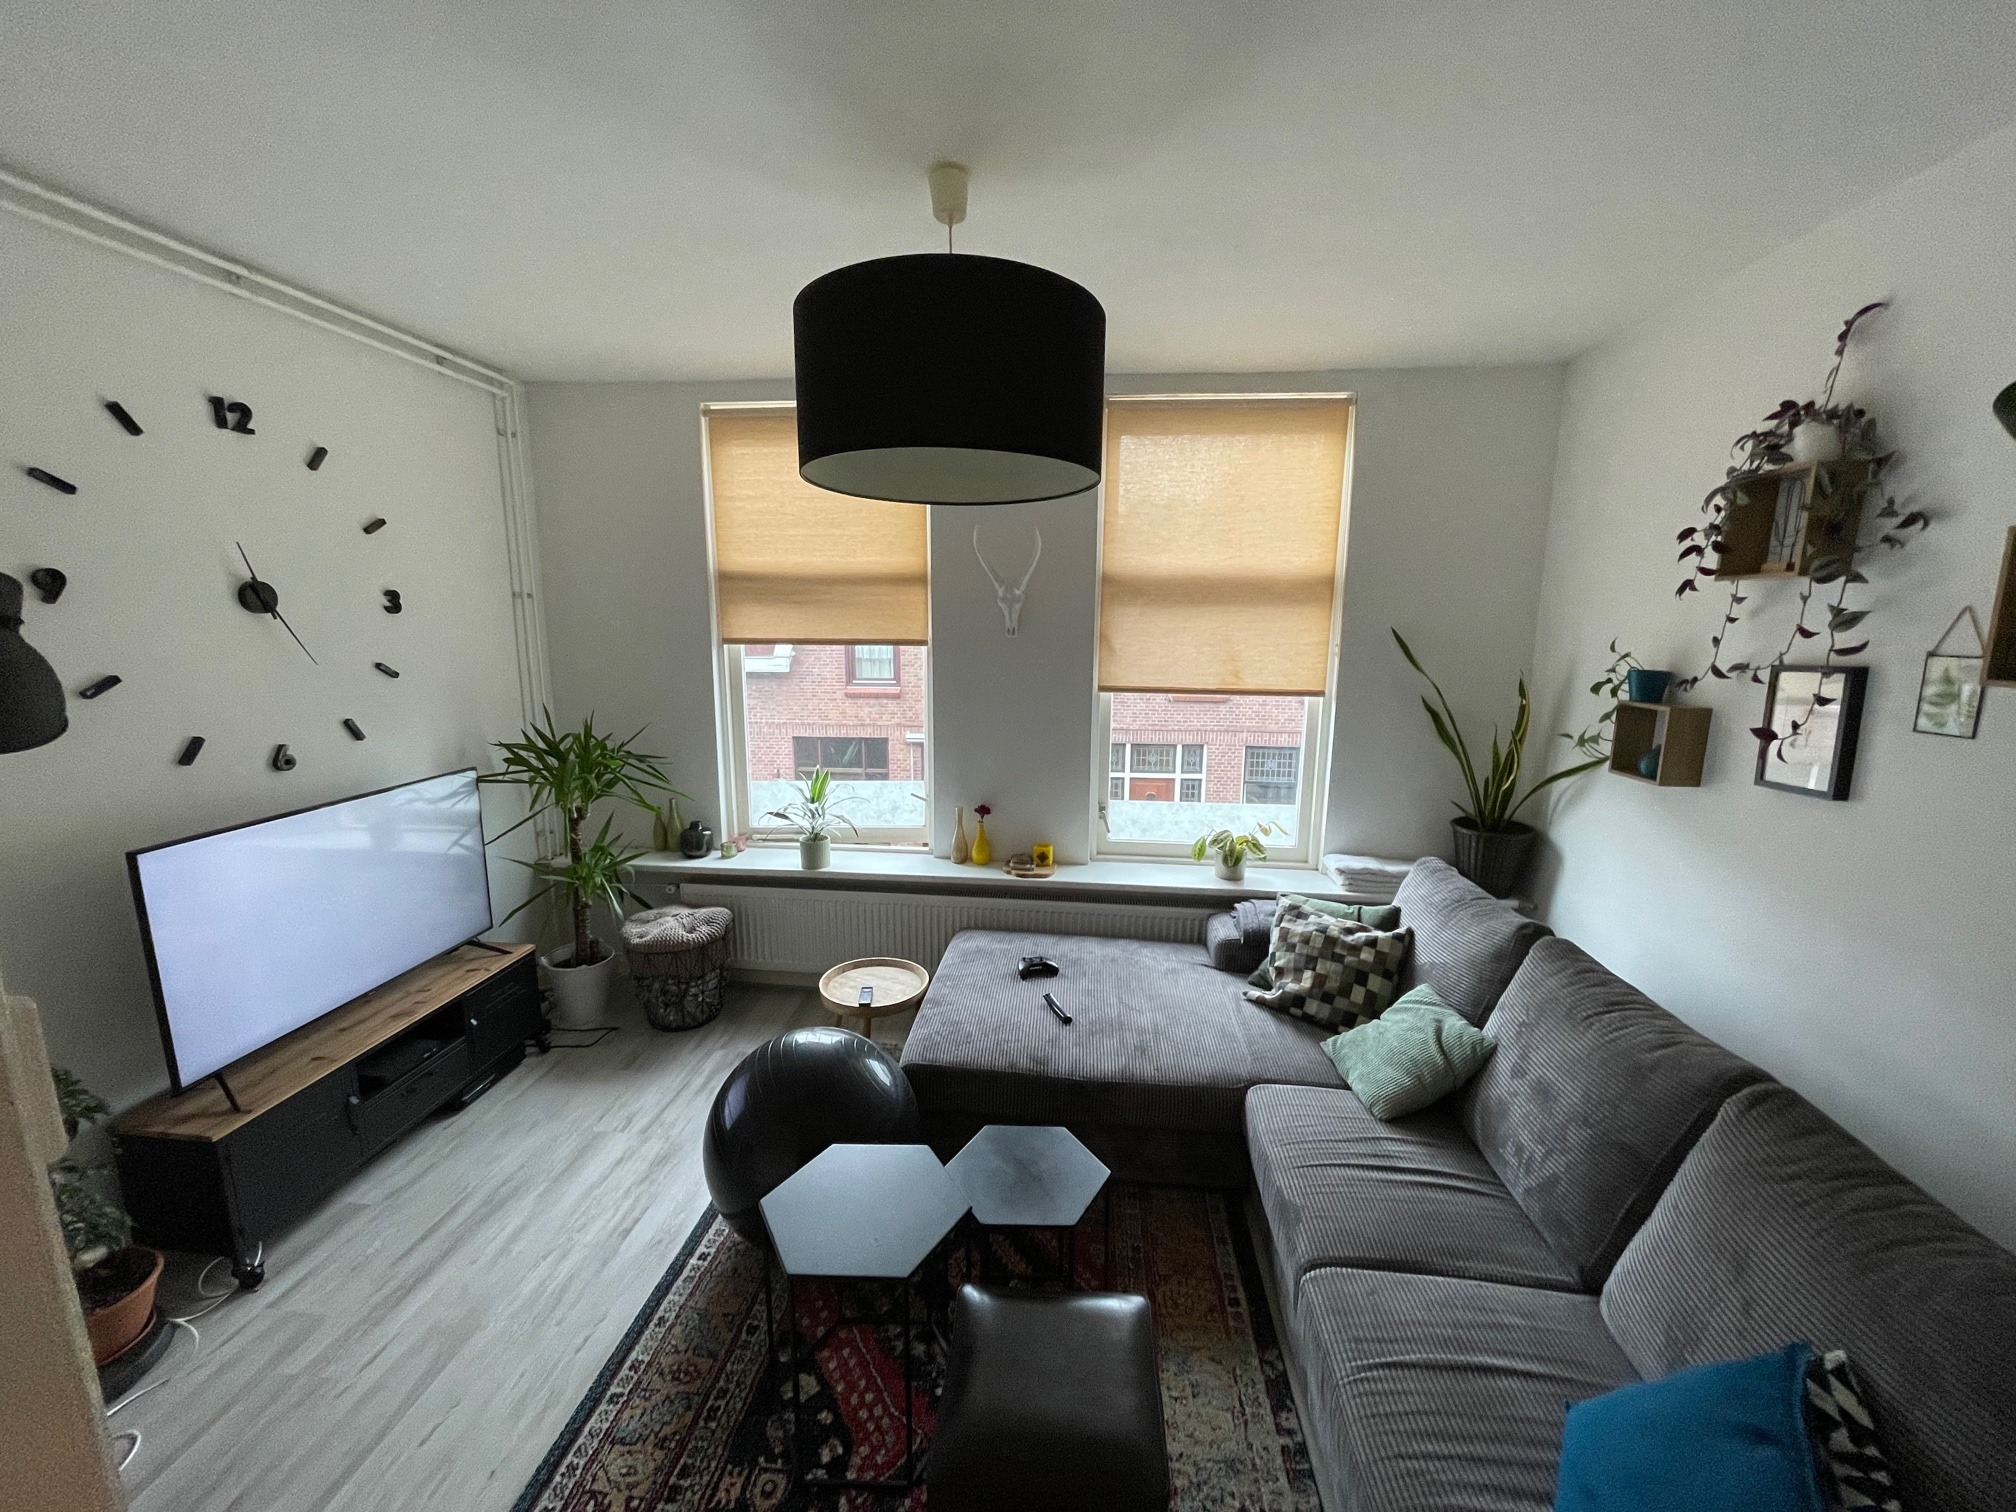 Woning / appartement - Rotterdam - Koolzaadstraat 35 A en B